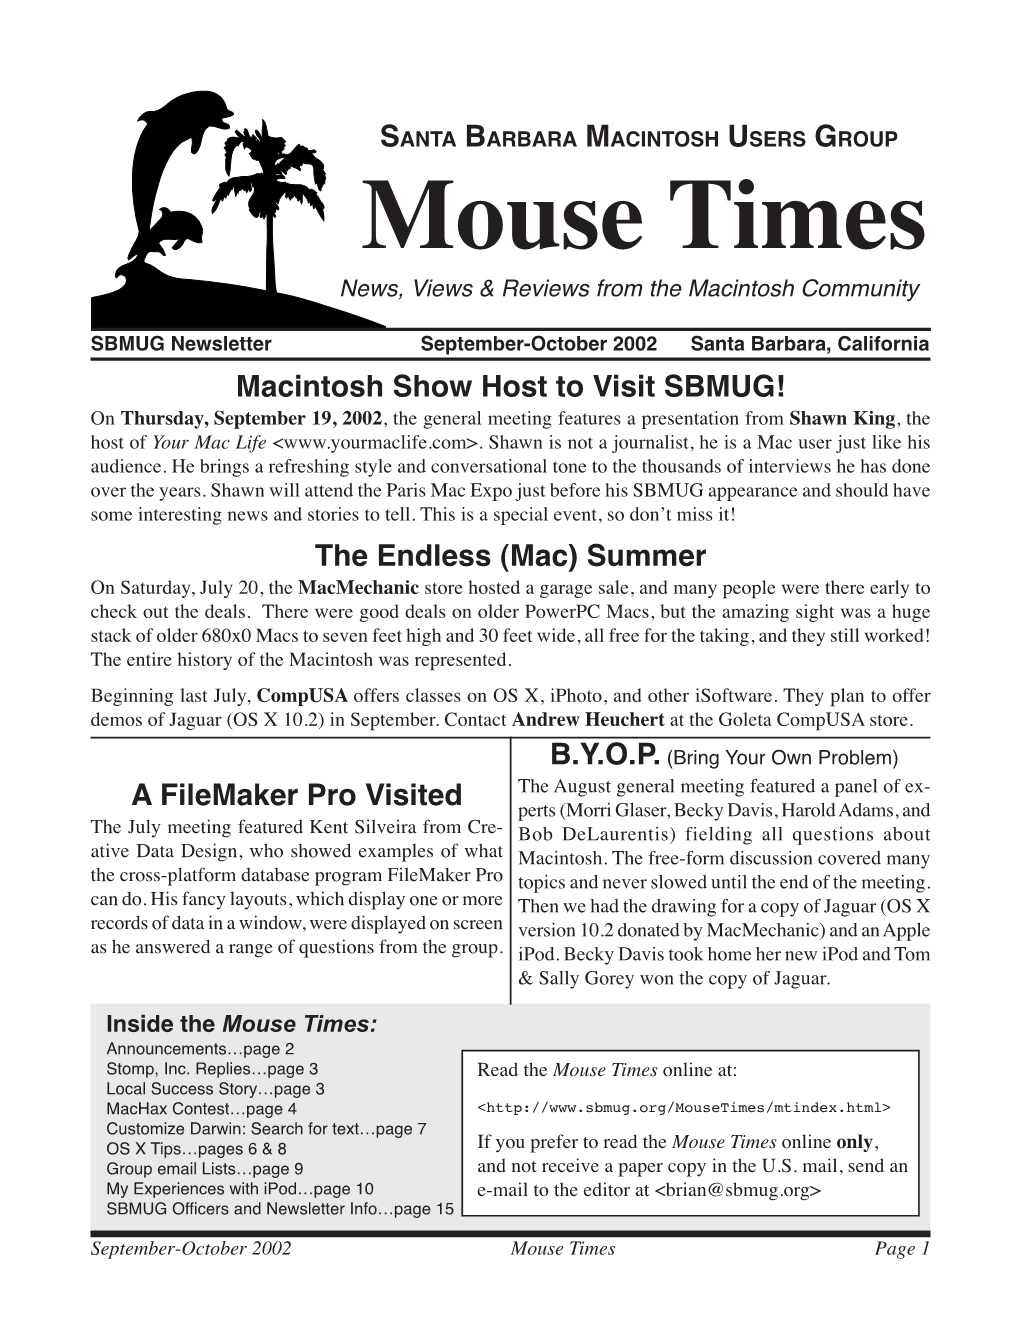 SANTA BARBARA MACINTOSH USERS GROUP Mouse Times News, Views & Reviews from the Macintosh Community